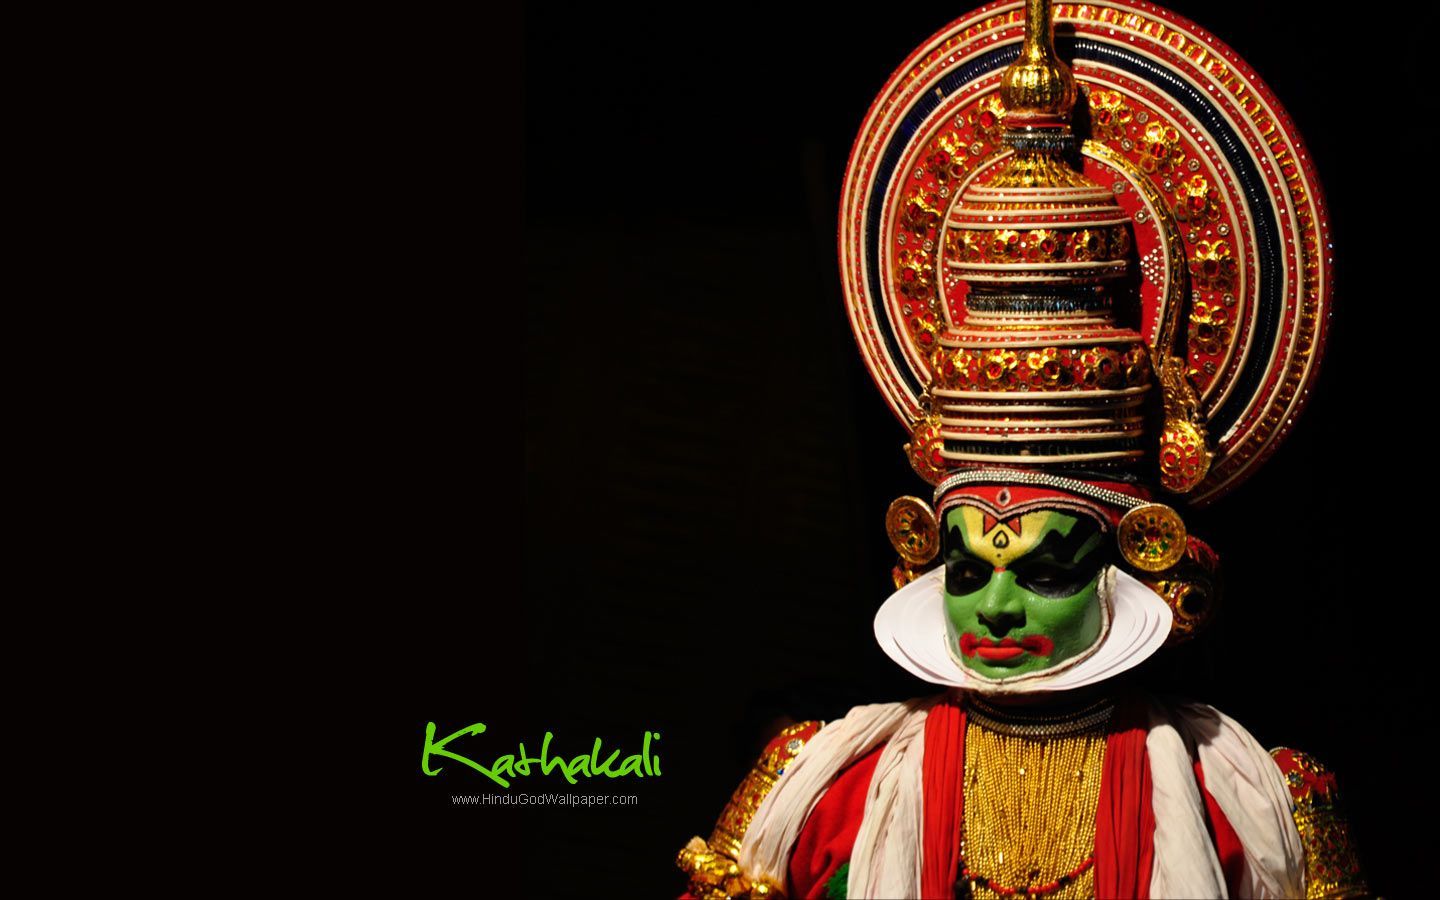 Kathakali Face Wallpaper Free Download. Kathakali face, Indian classical dance, Dance wallpaper